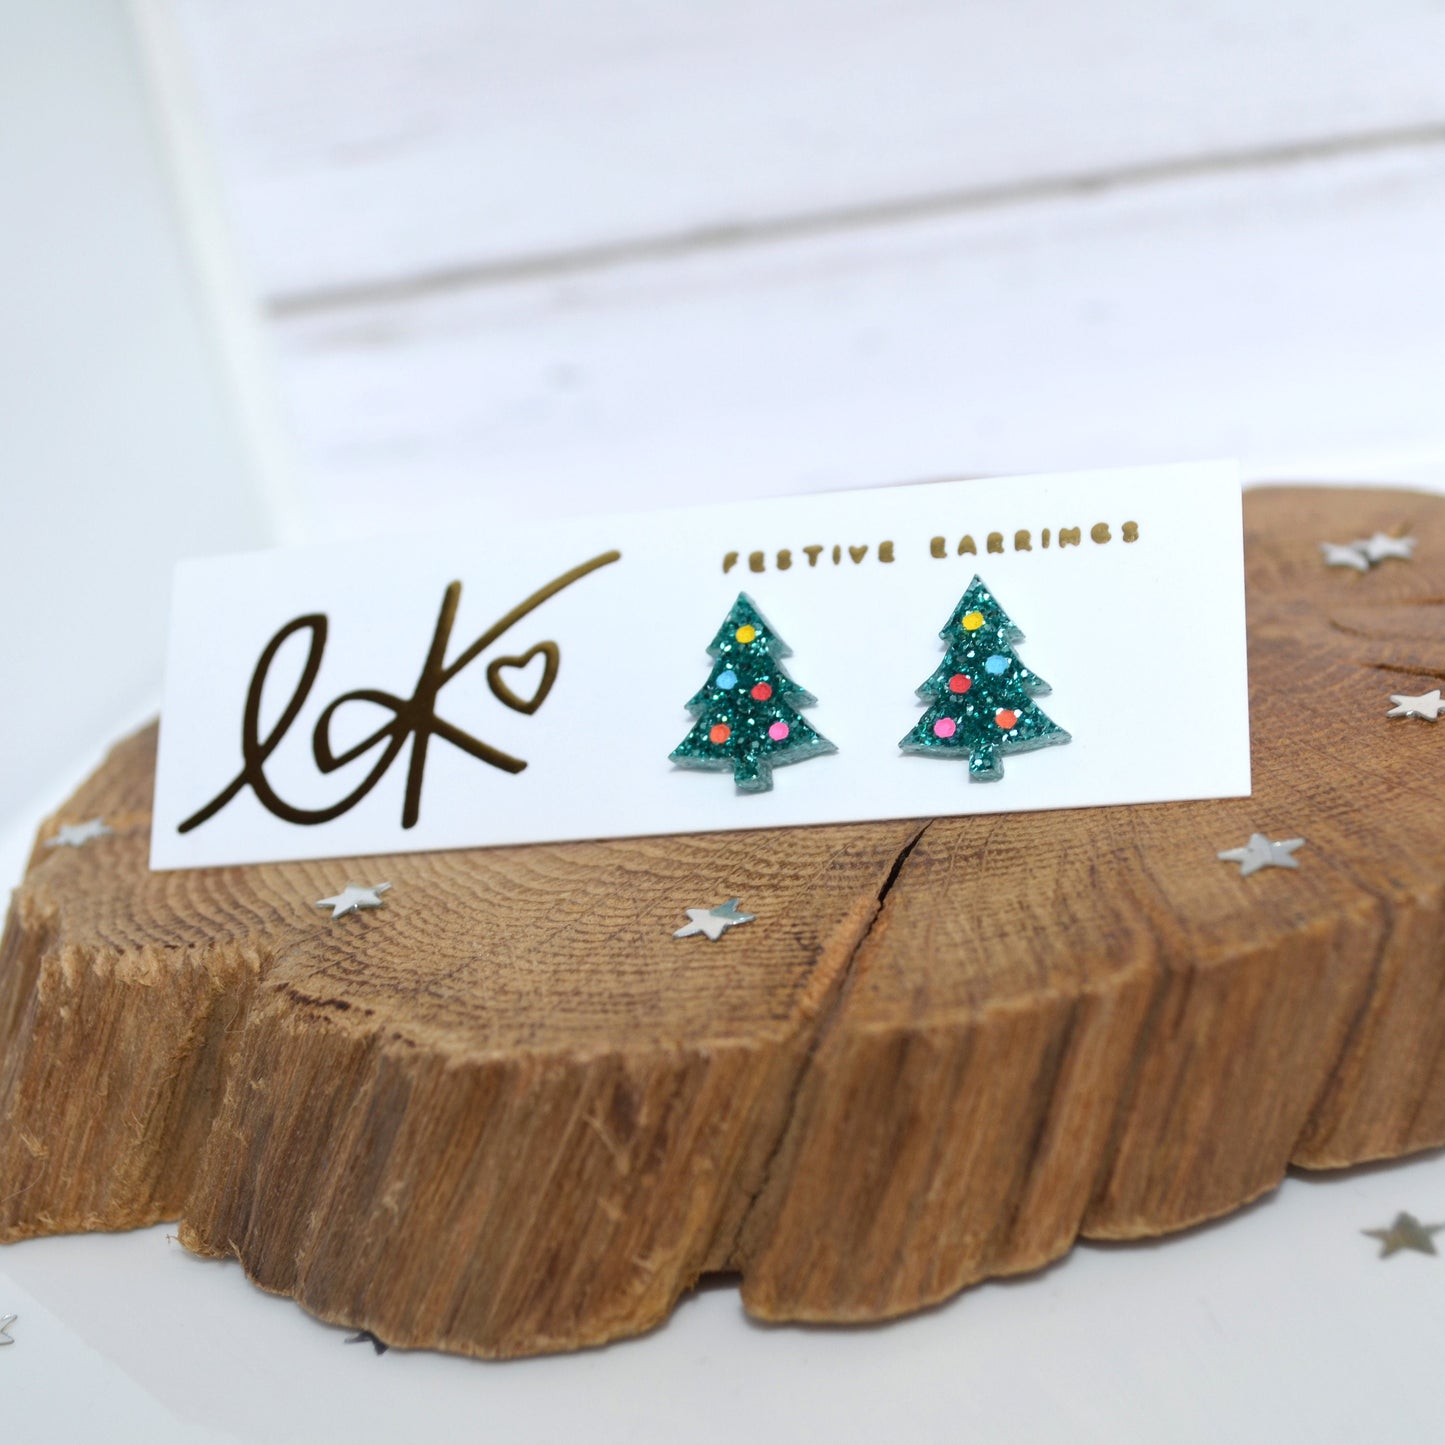 Hand-painted Green Glitter Christmas Tree Stud Earrings